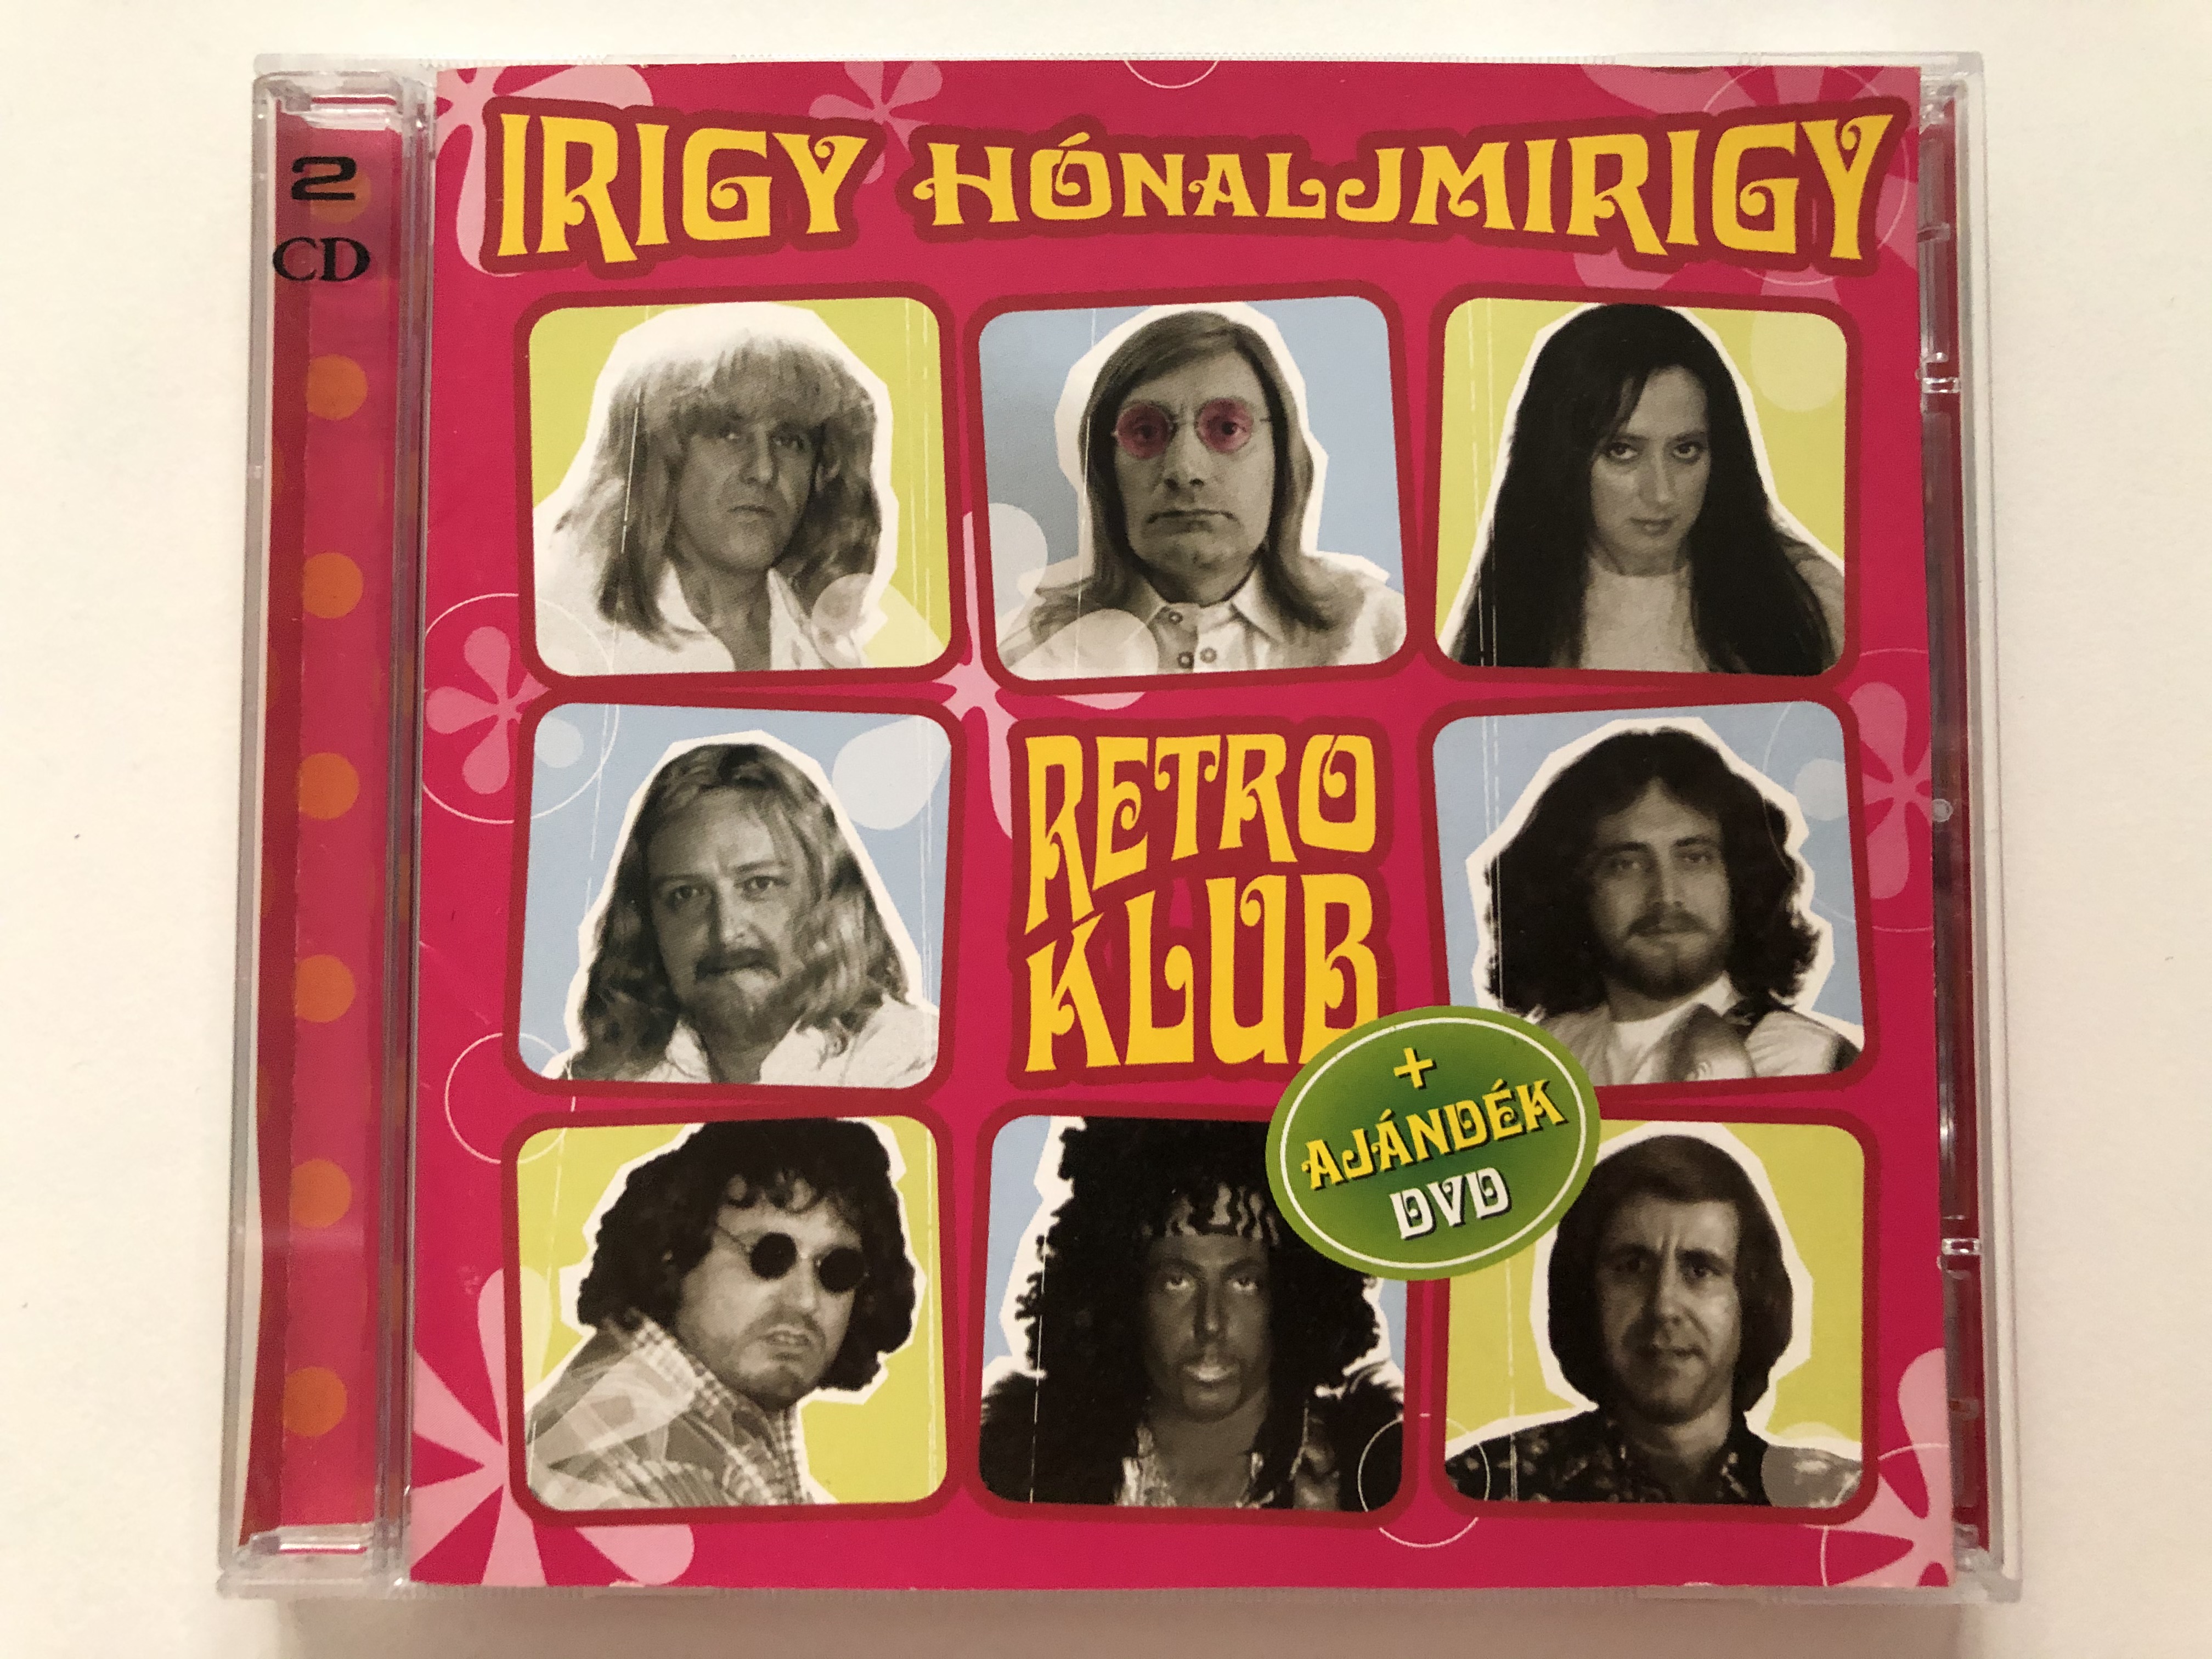 irigy-h-naljmirigy-retro-klub-ajandek-dvd-cls-records-audio-cd-dvd-cd-cls-sa0542-1-.jpg